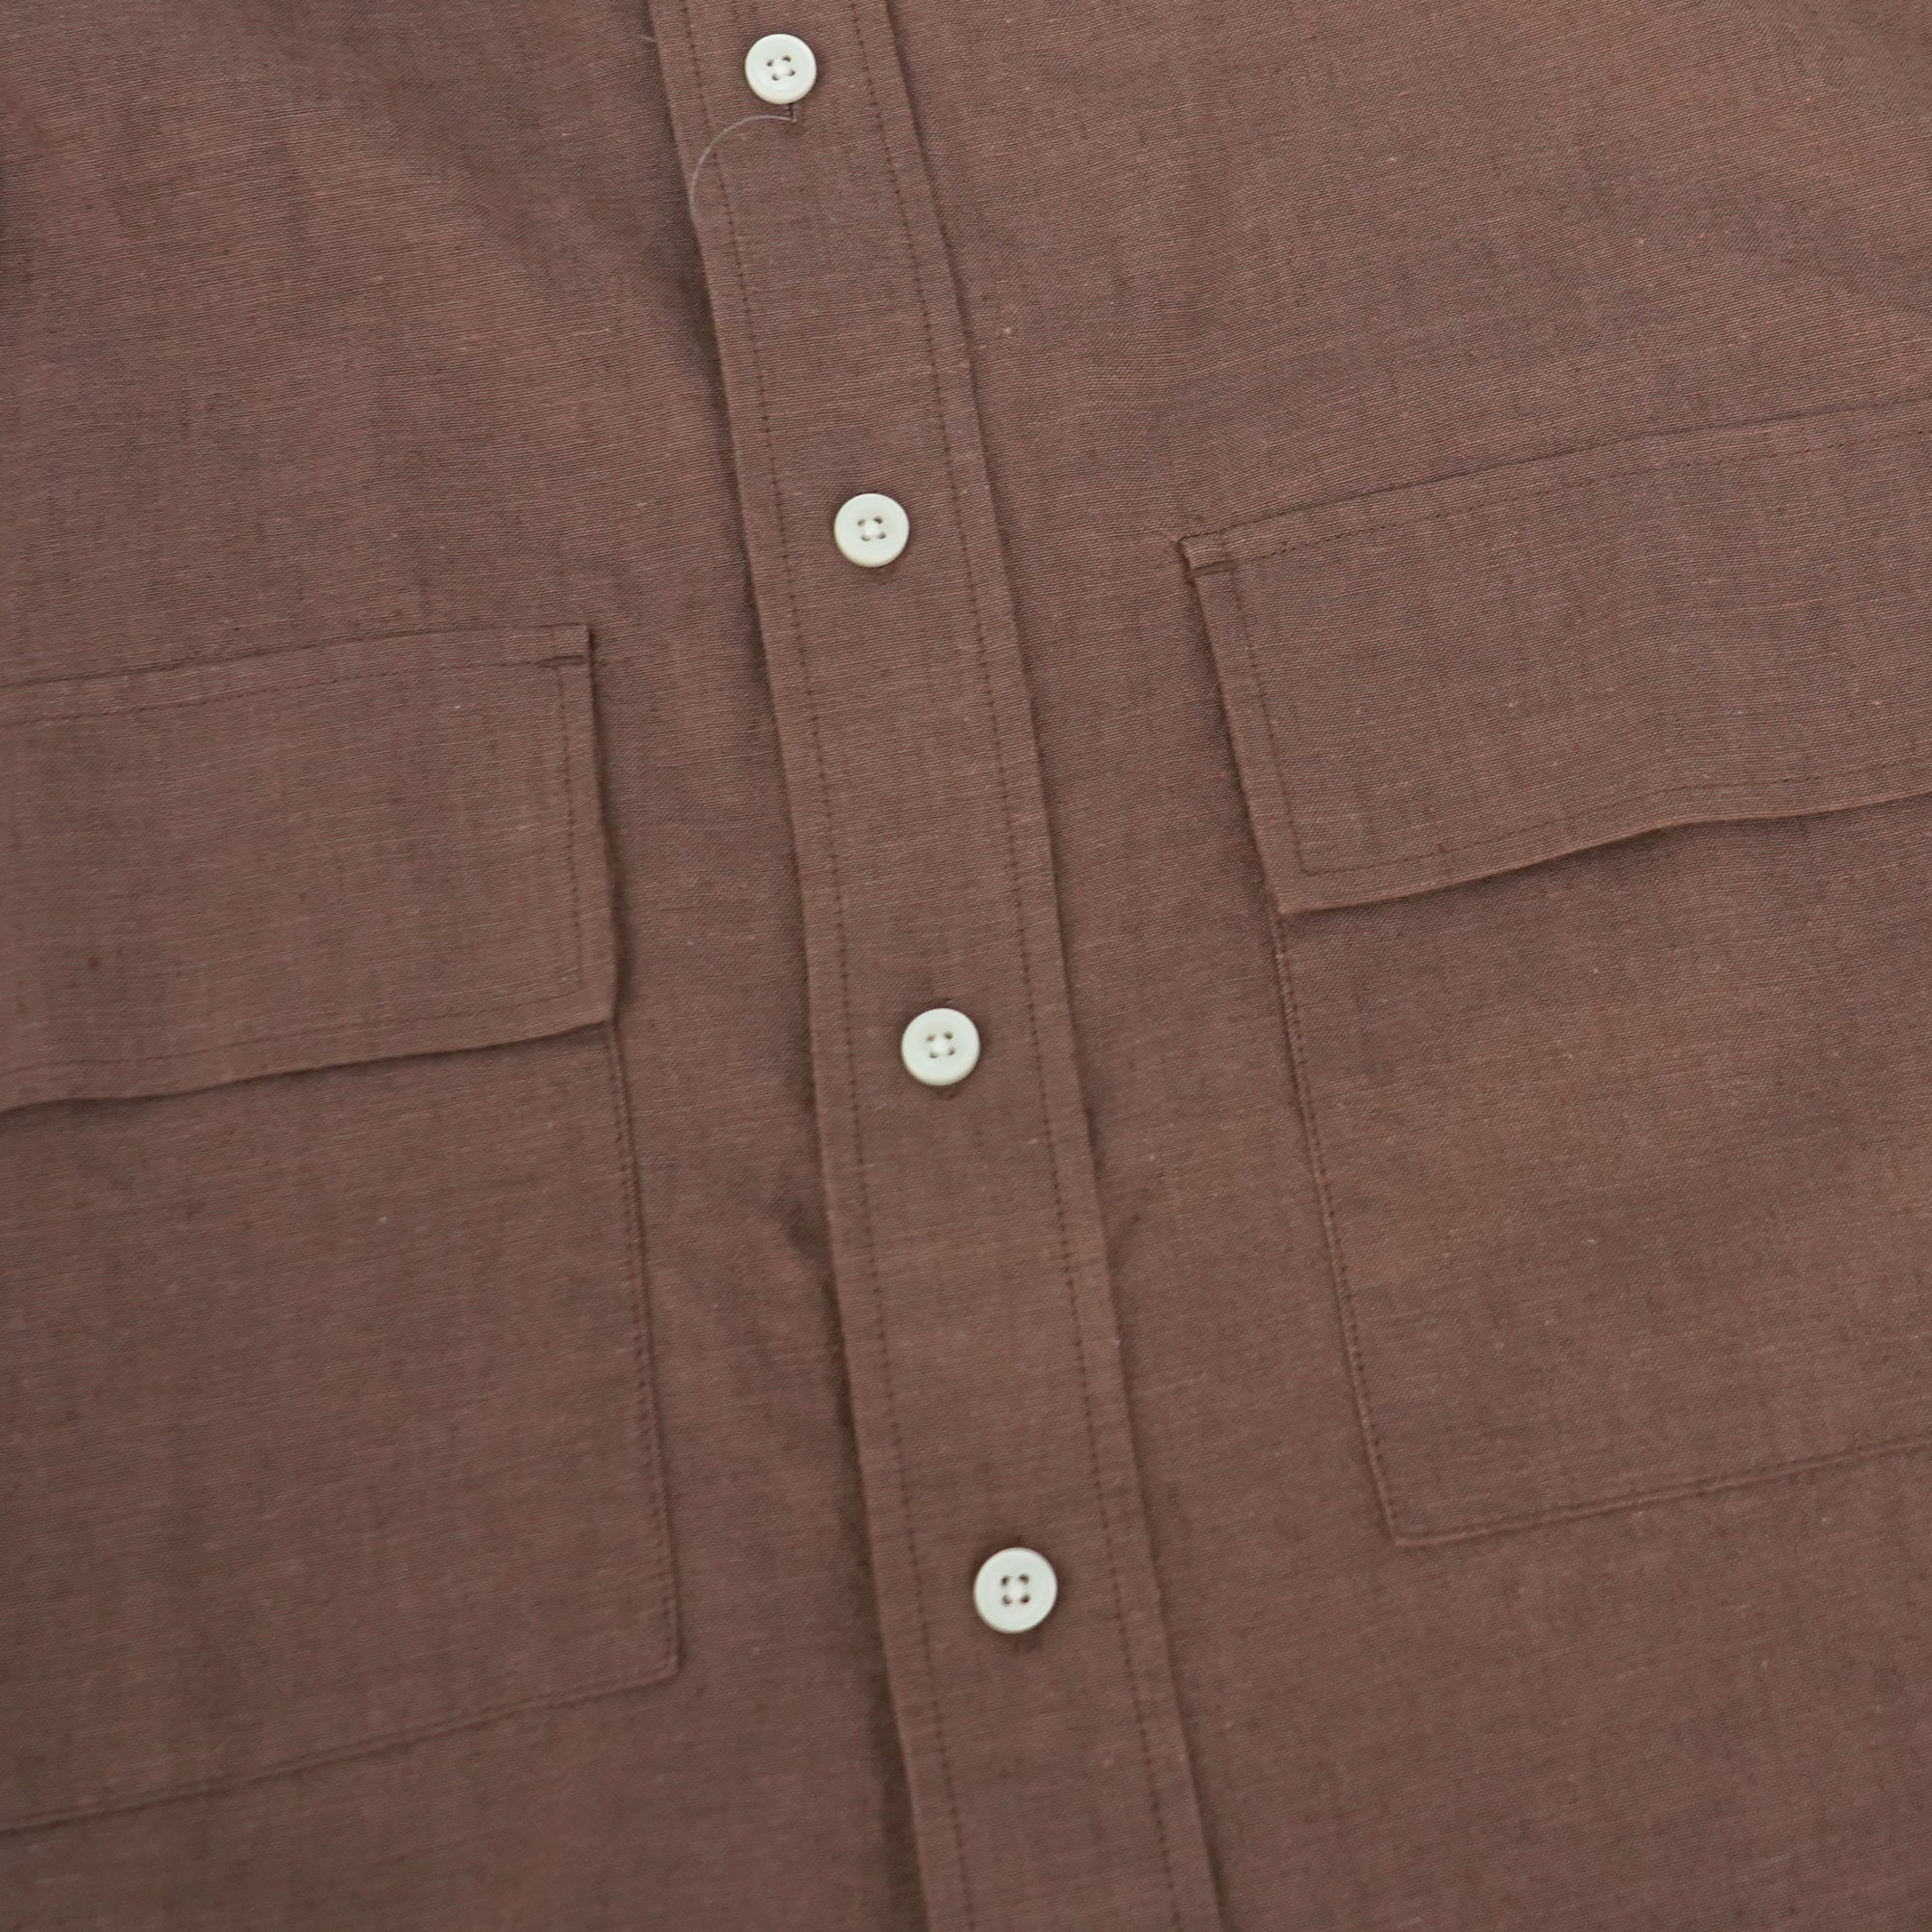 Men's Linen Cotton Shirt